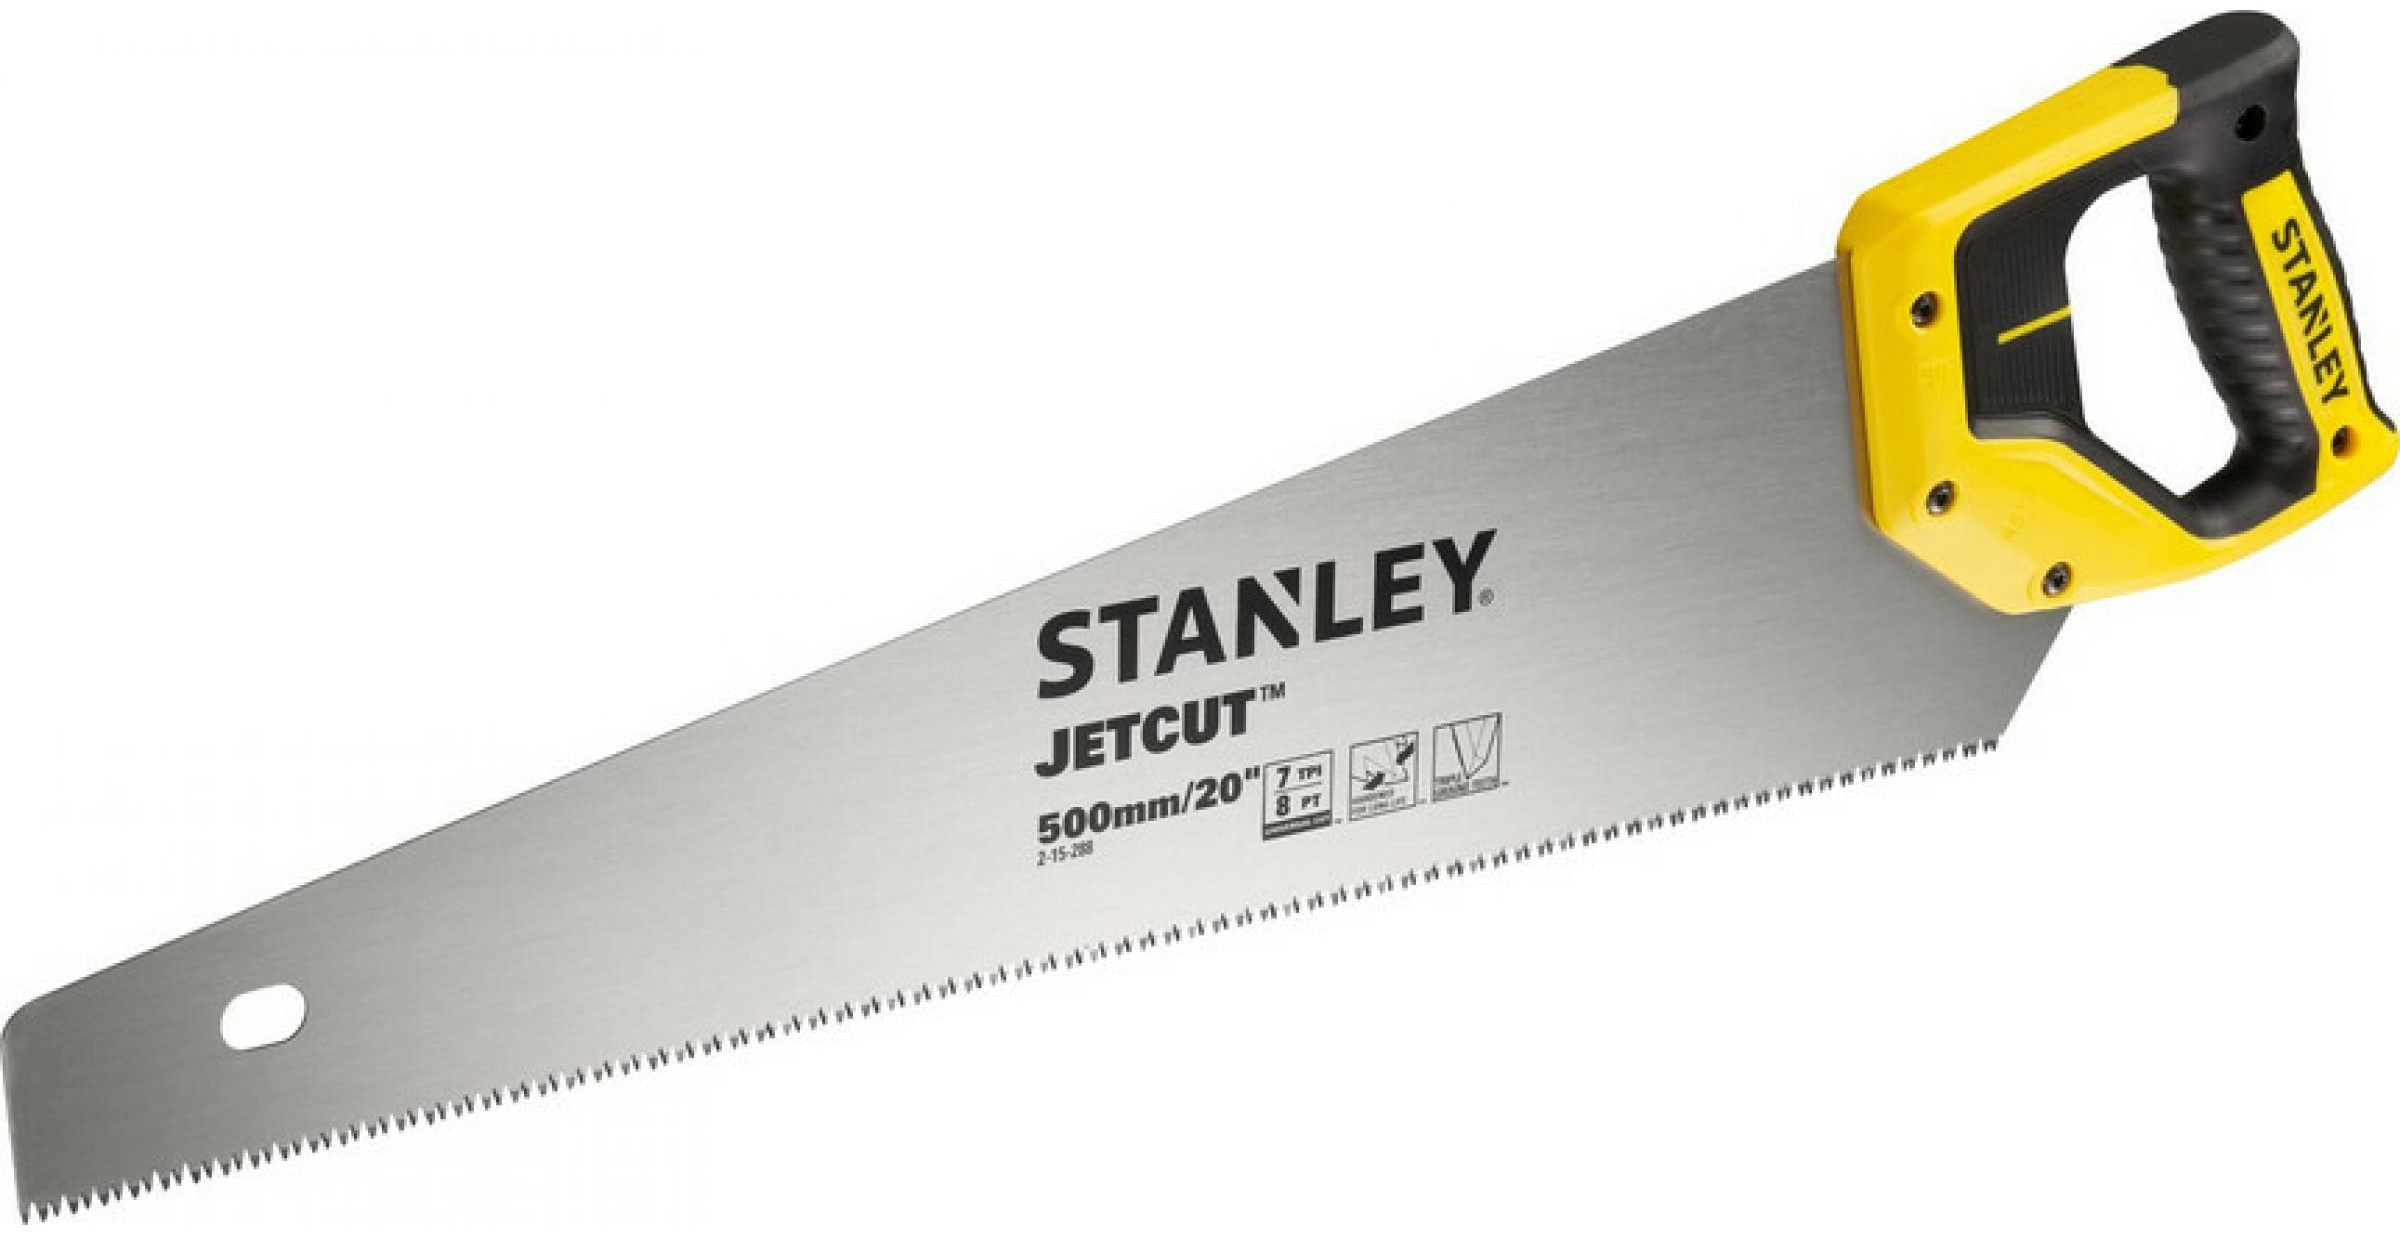 Ножовка 450 мм. Ножовка по дереву Stanley JETCUT 2-15-595 450 мм. Ножовка с обушком Stanley Jet-Cut. Пила для стусла 350мм Stayer 15365-35. Ножовка по дереву с мелким зубом.